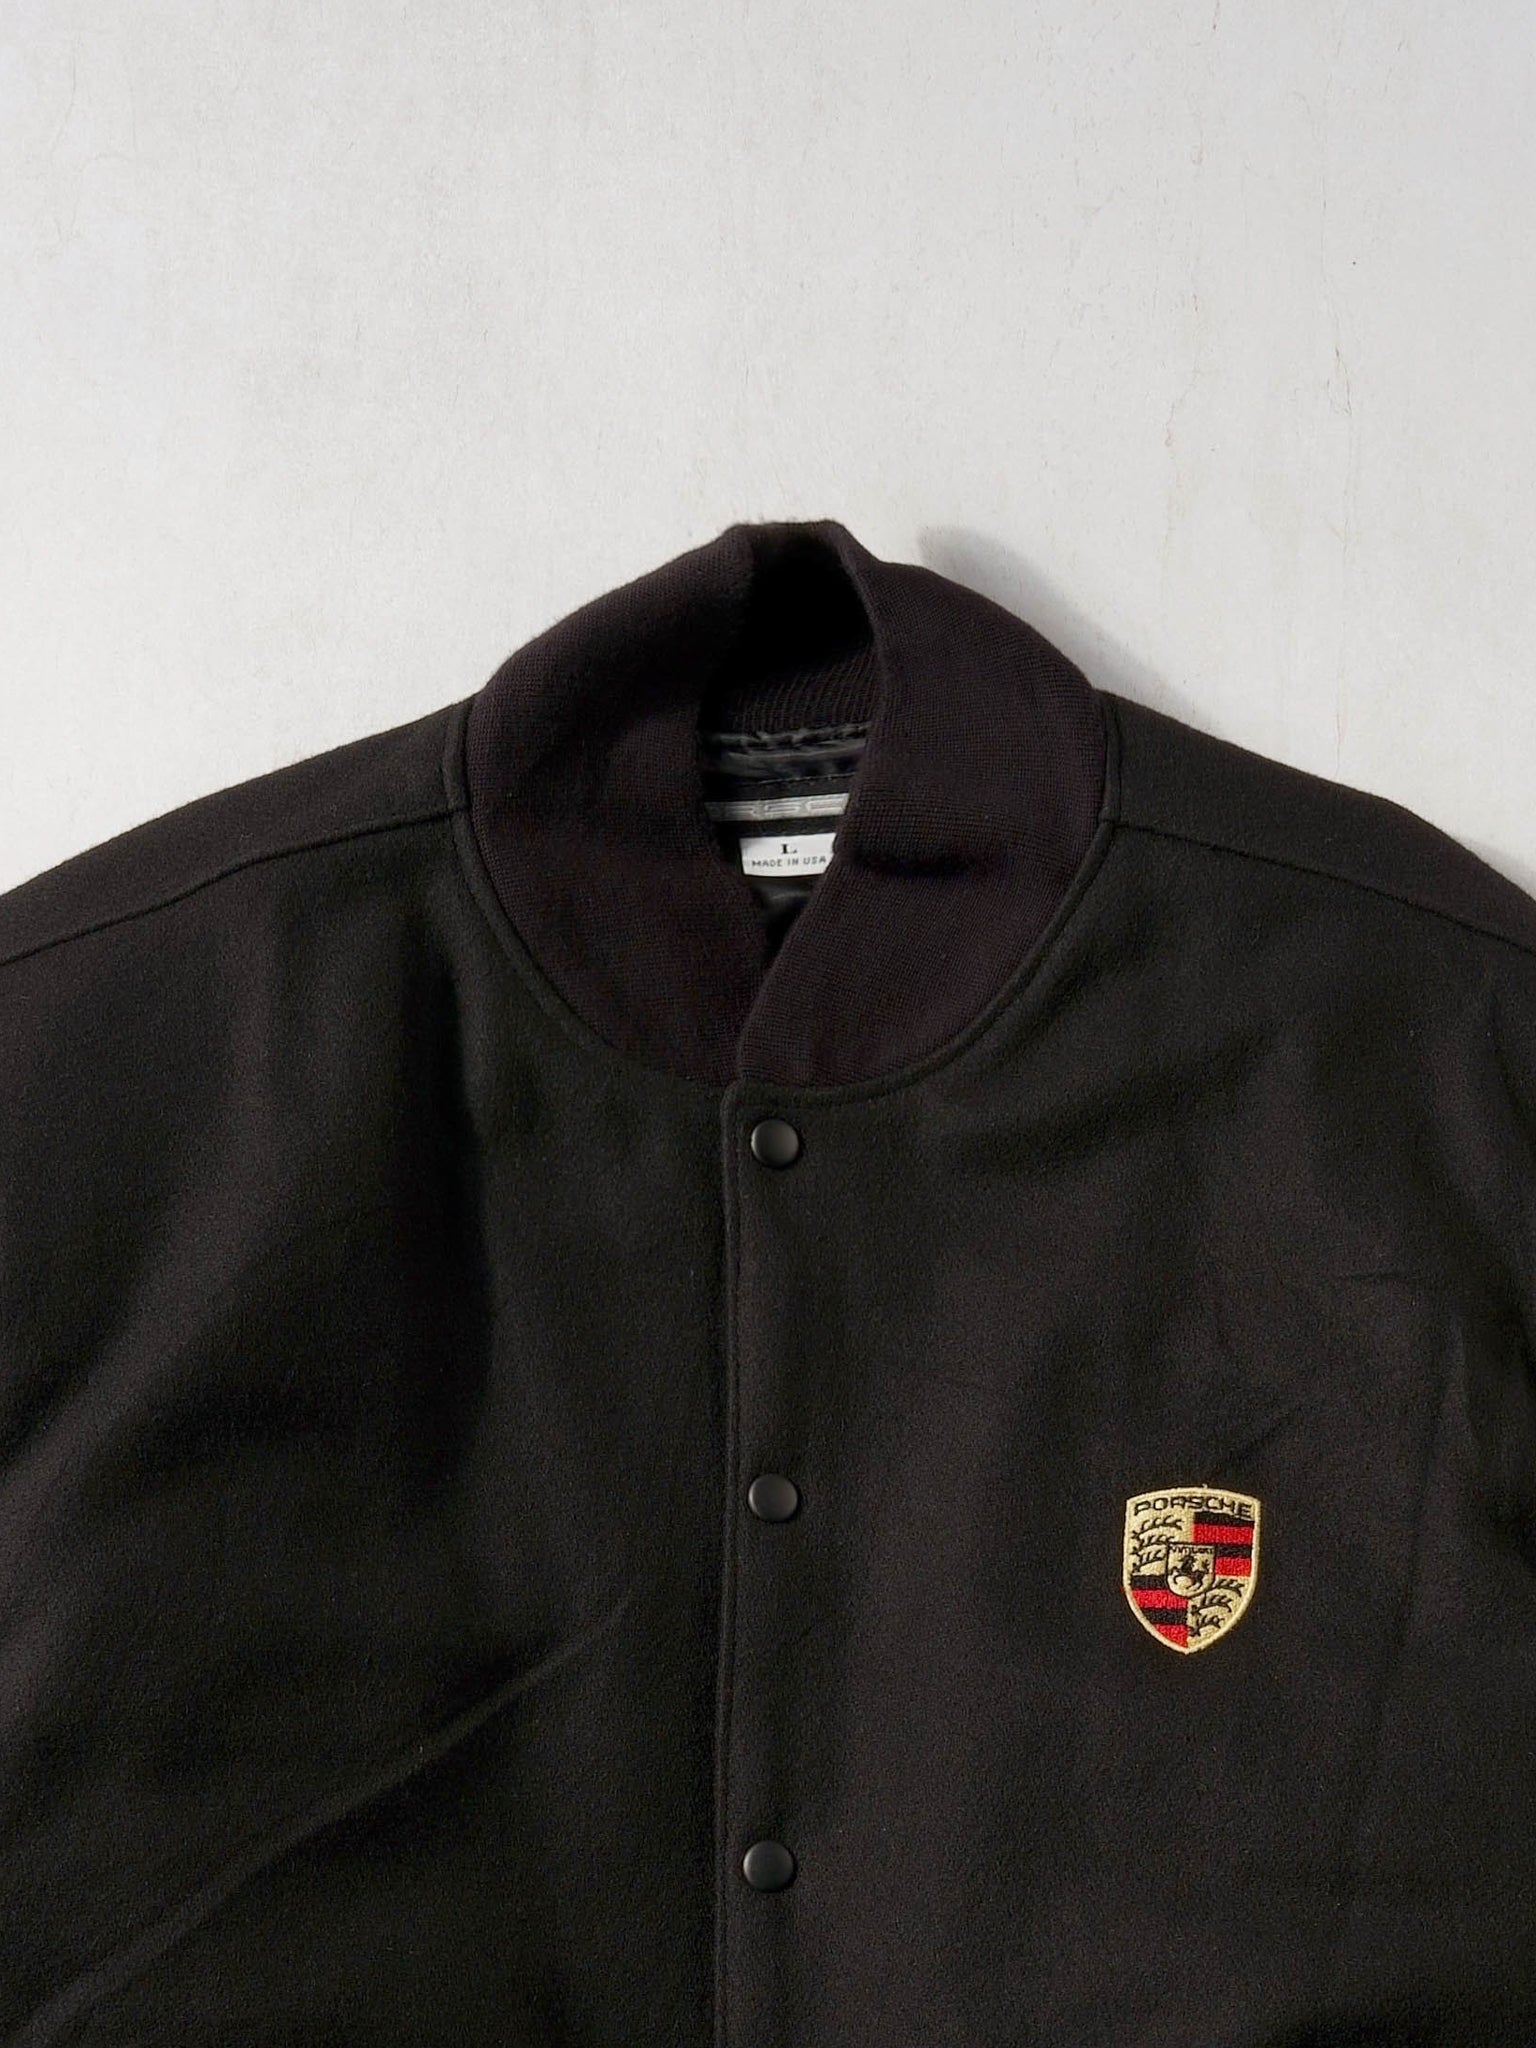 Vintage 90s Black Wool and Leather Porsche Varsity Jacket (XL)